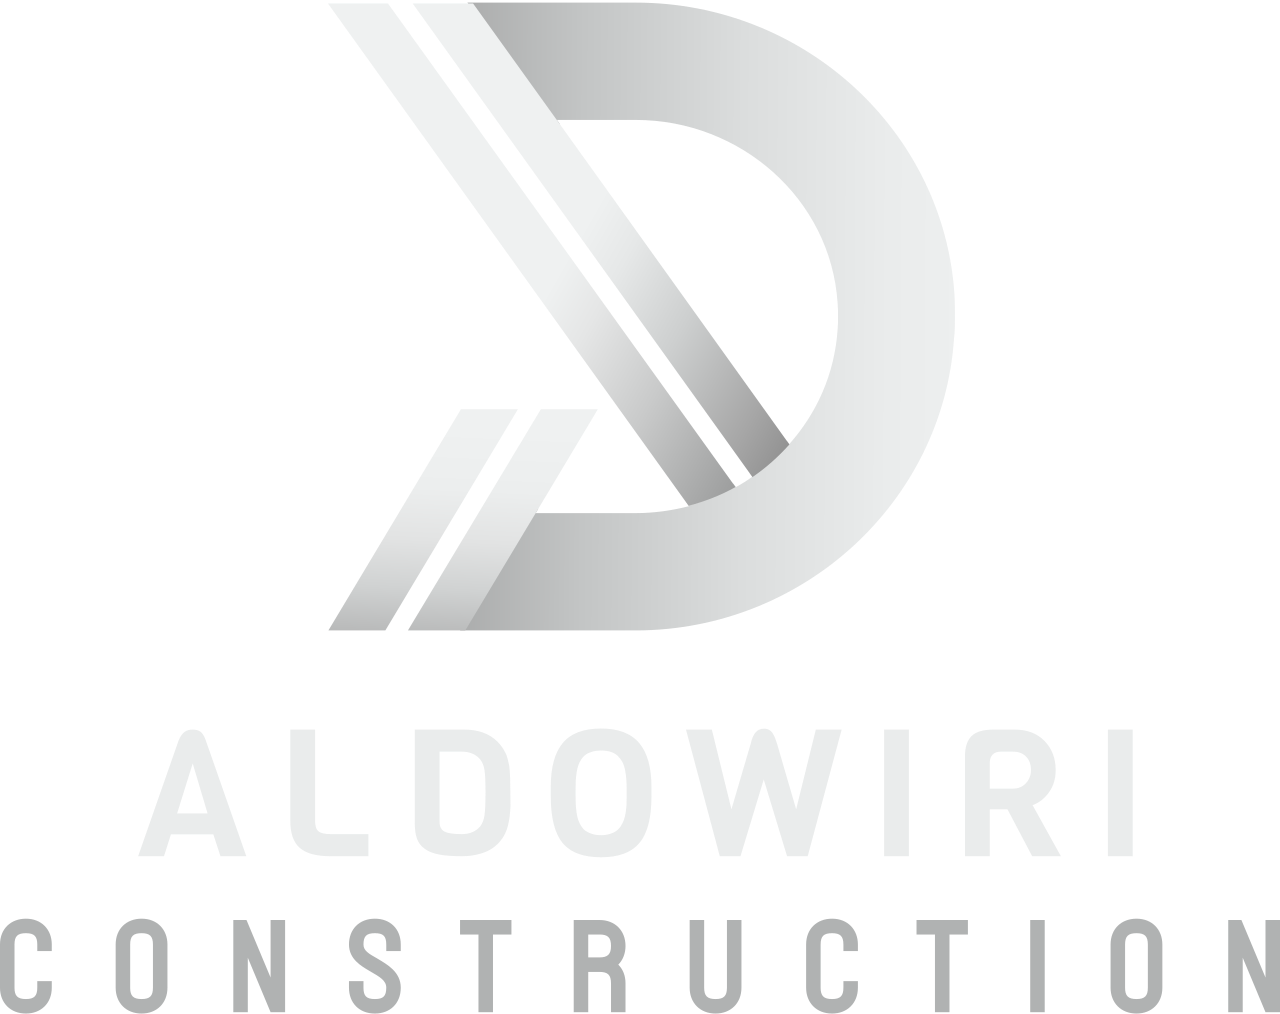 Aldowiri's logo